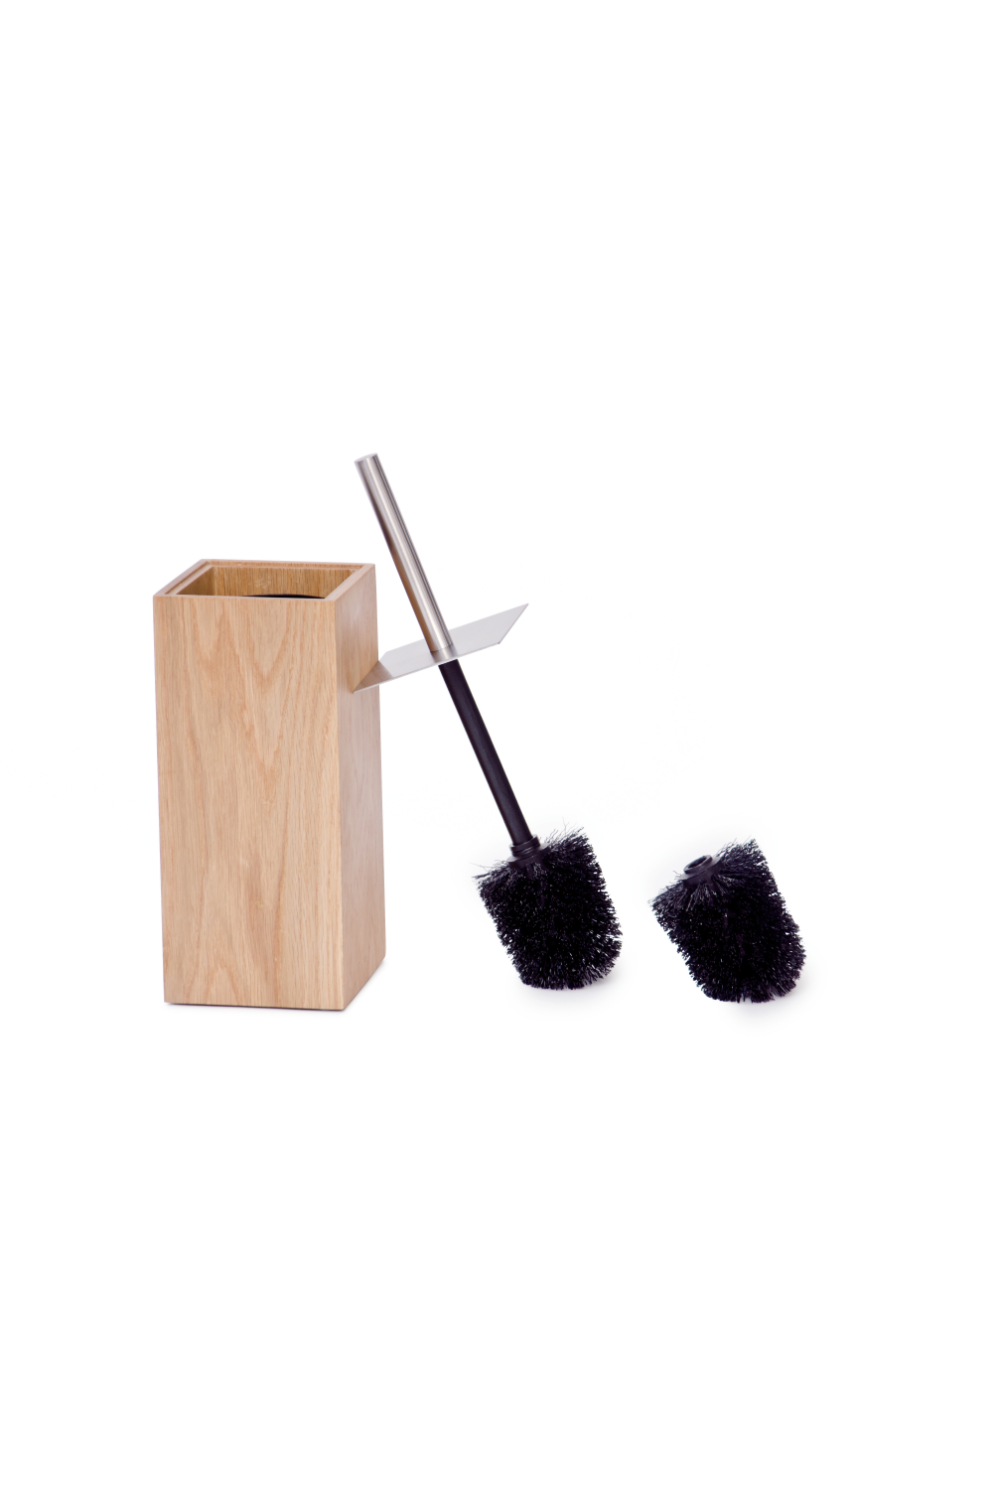 Oak Square Toilet Brush | Wireworks Mezza | Woodfurniture.com